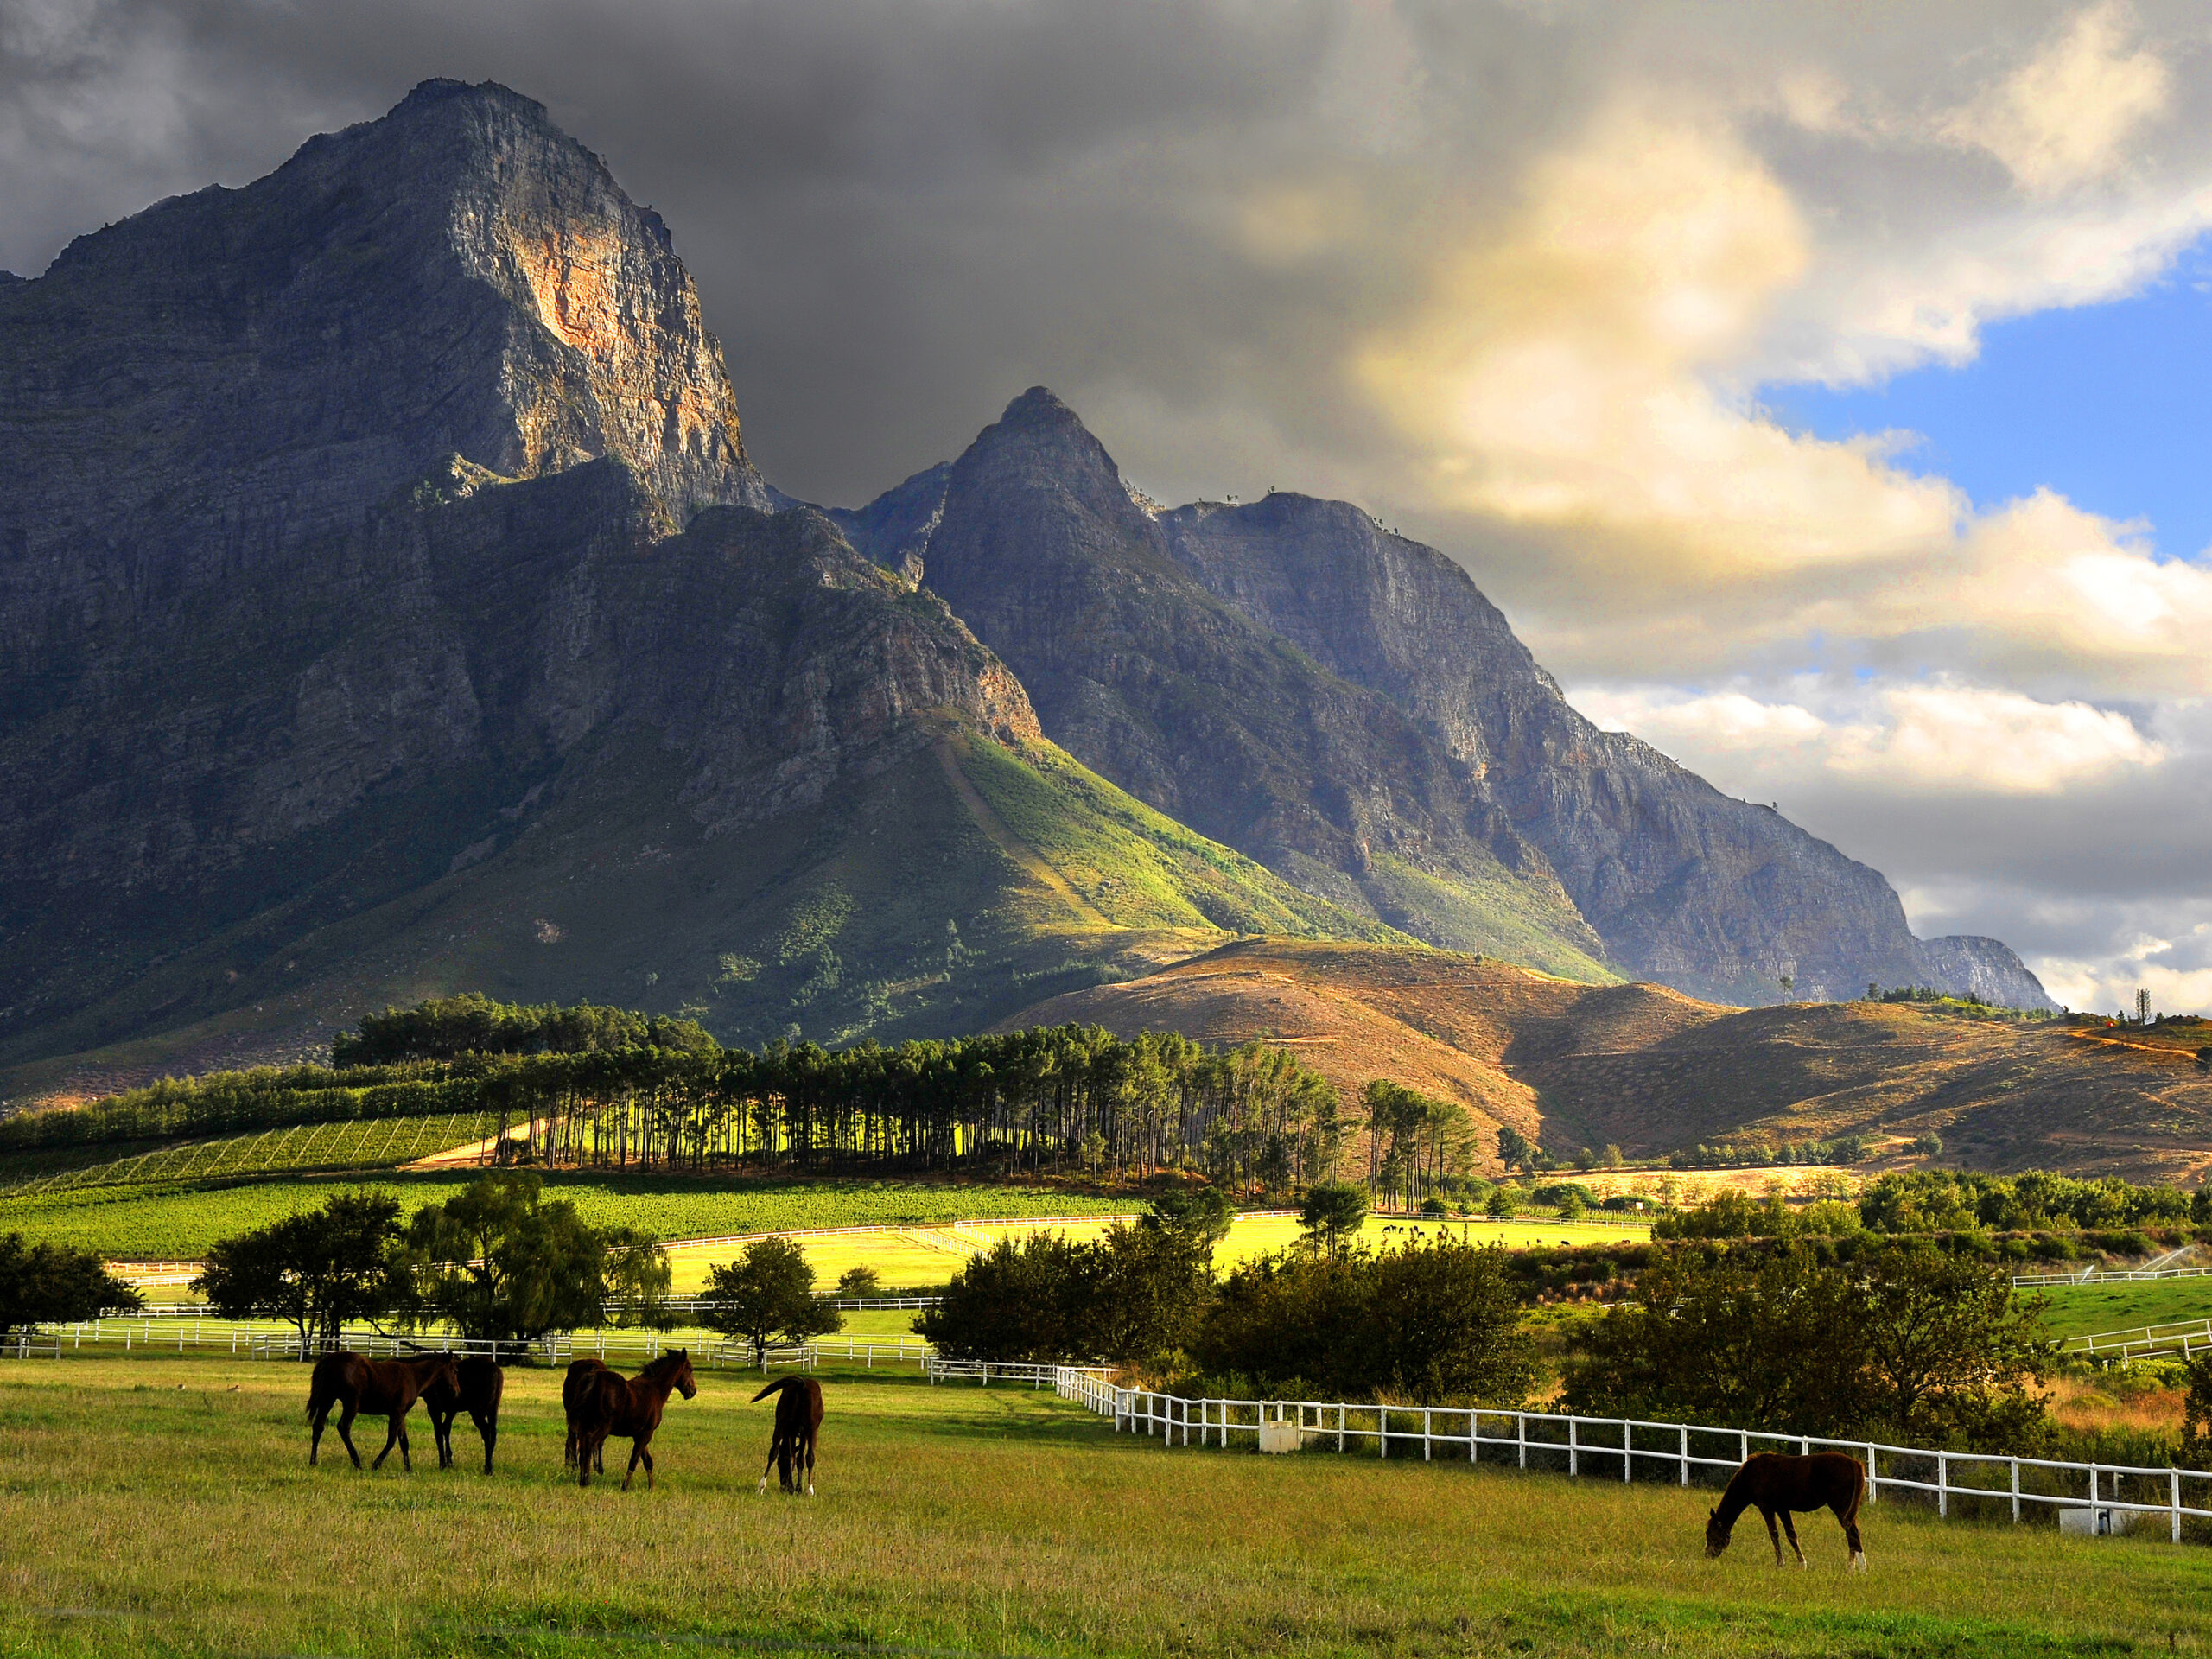 Bergen rondom Franschhoek Zuid-Afrika